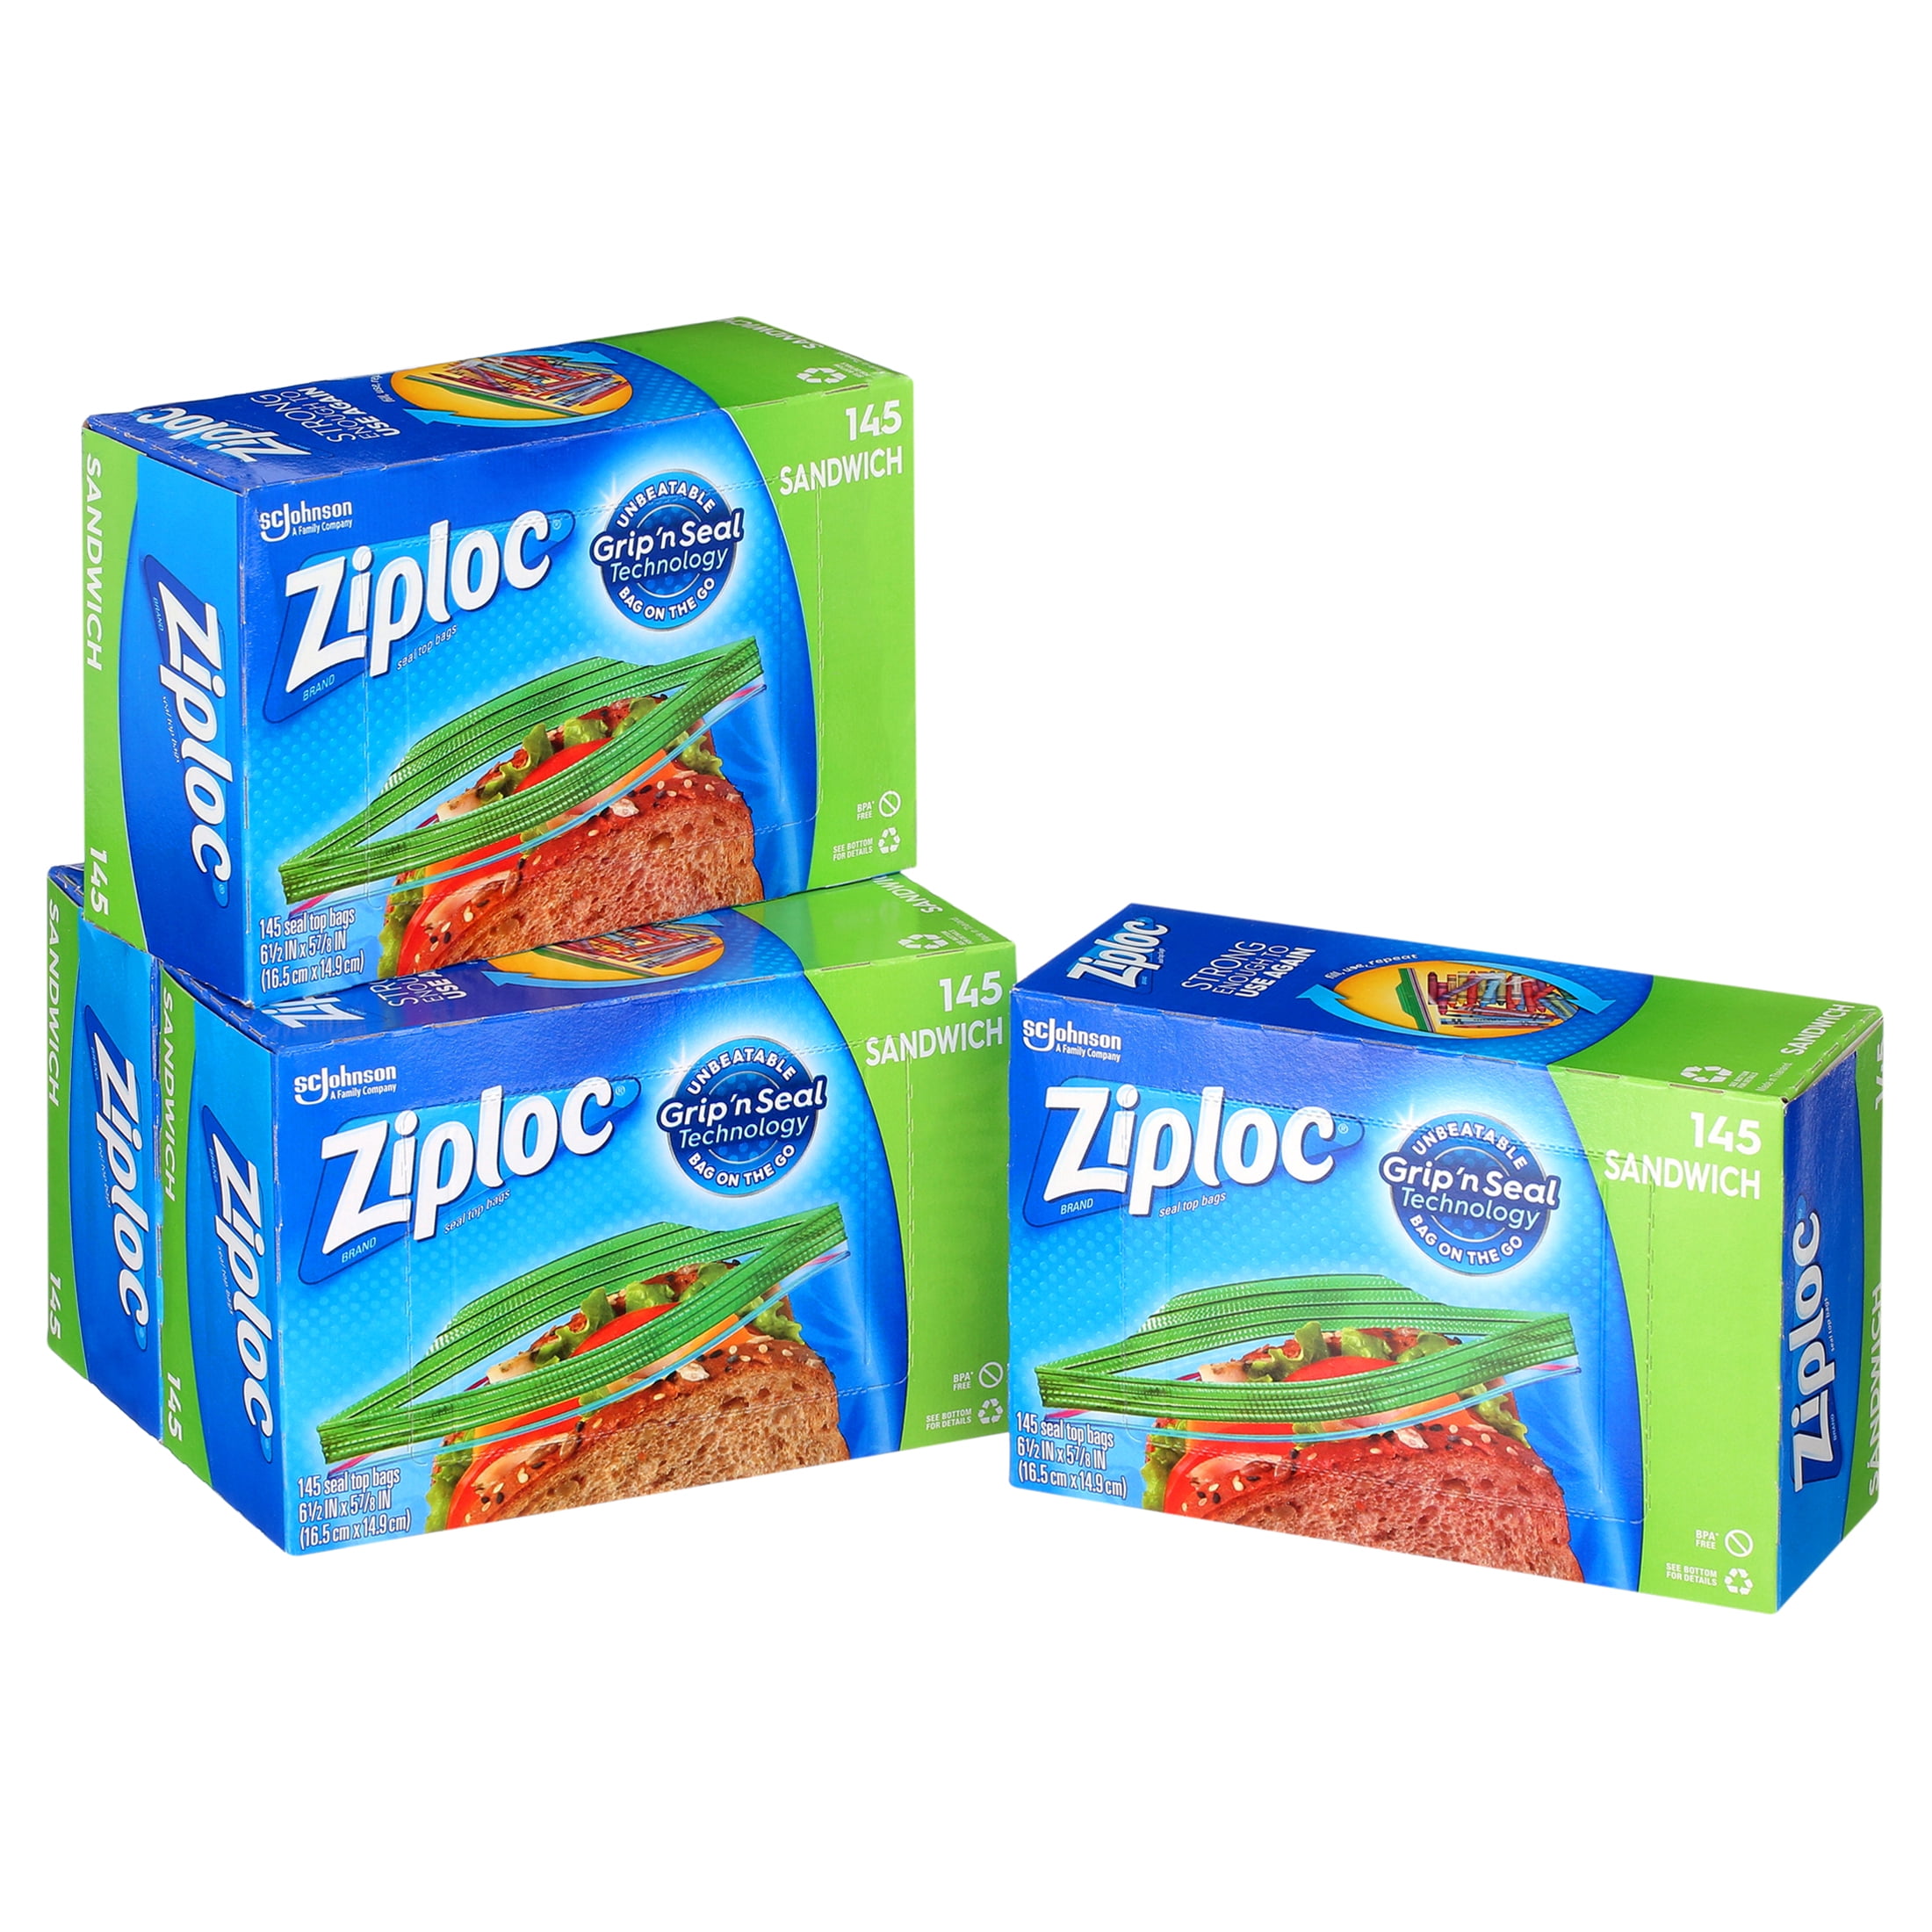 Ziploc Sandwich Bags (40-ct)-13410